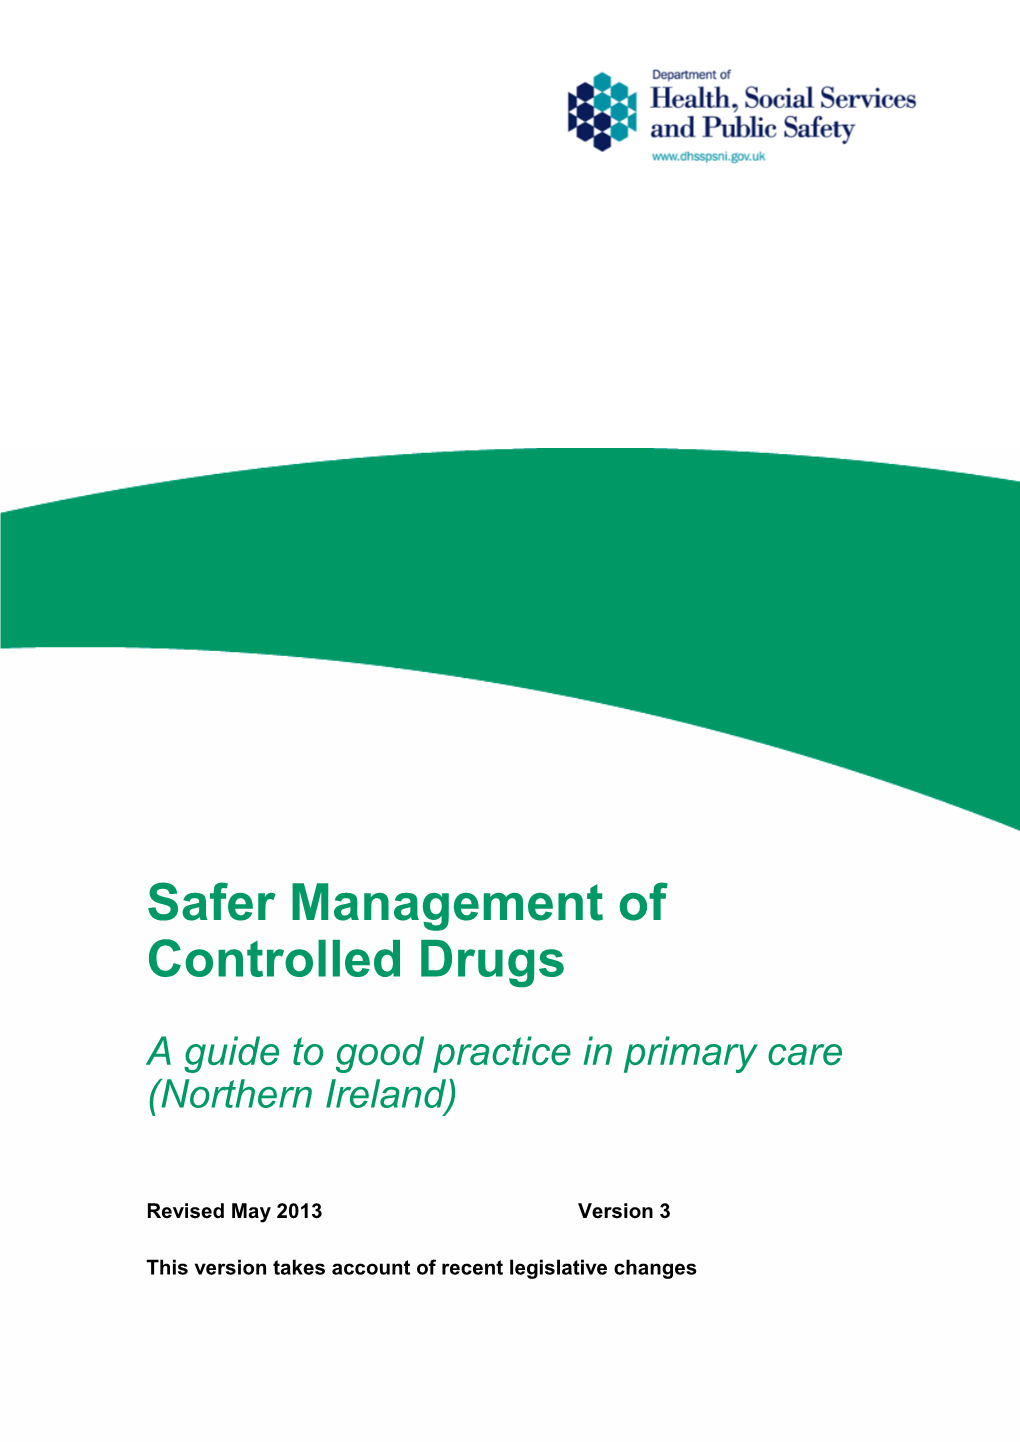 Safer Management of Controlled Drugs